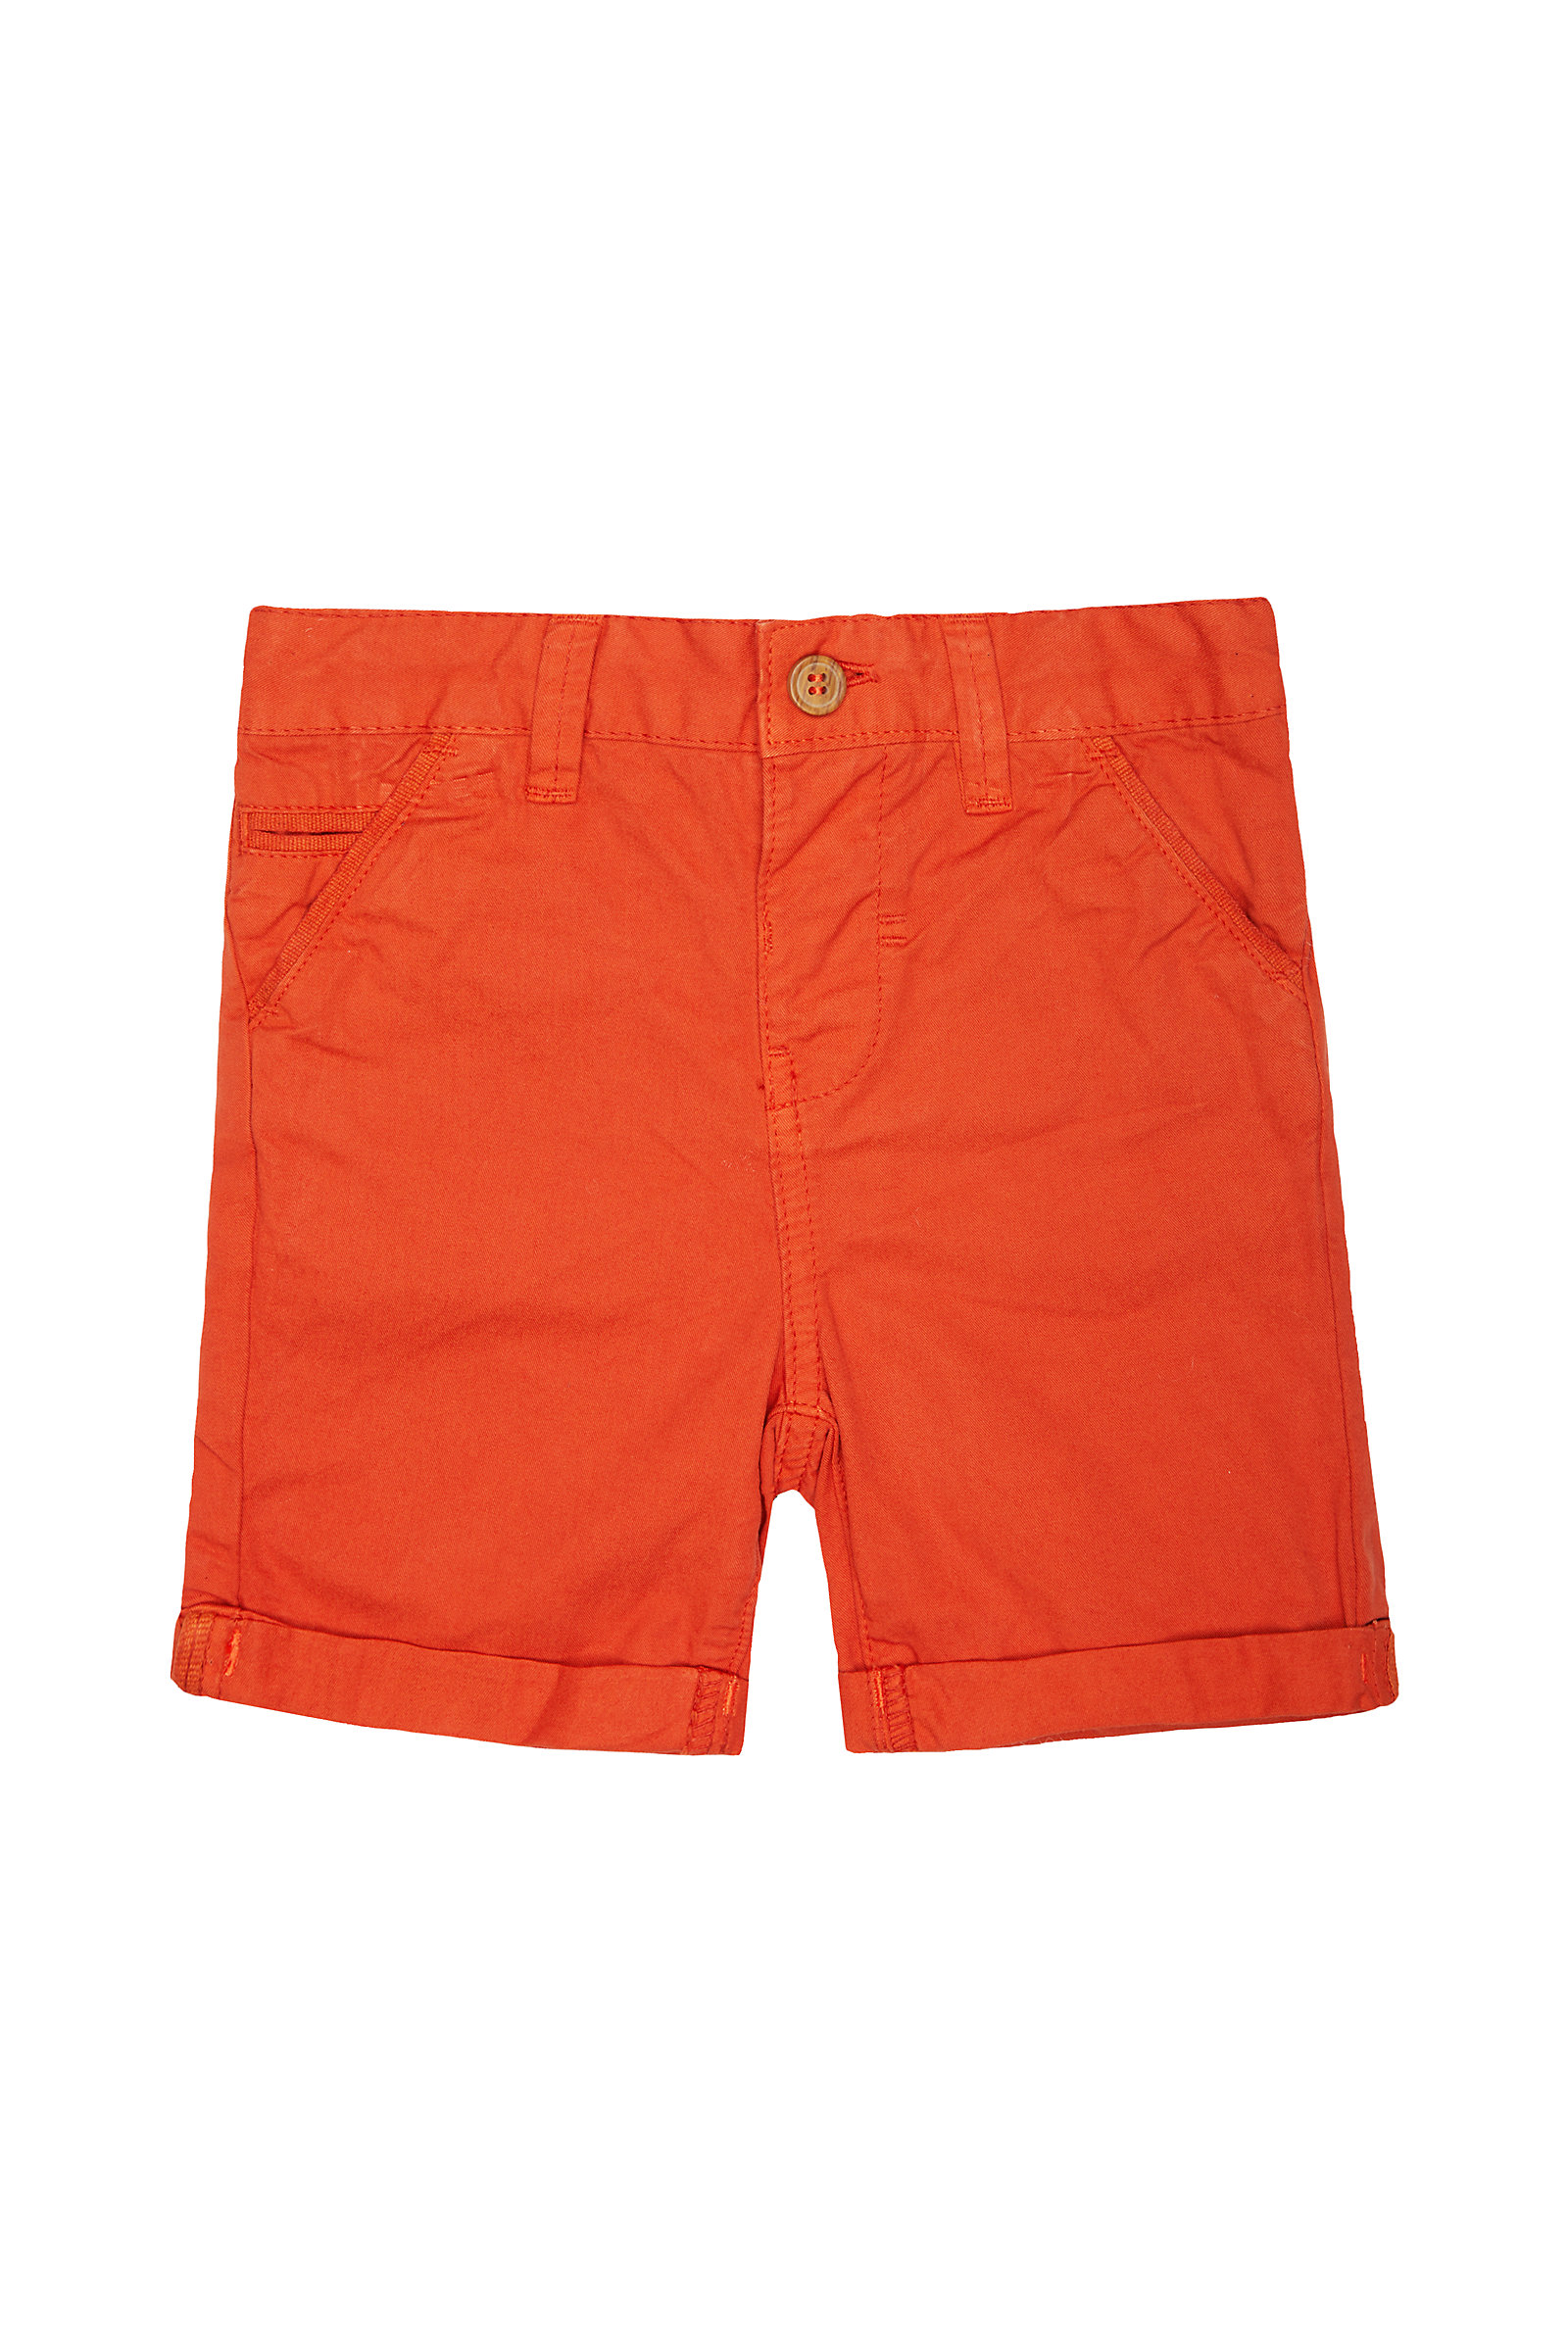 Mothercare Boys Solid Orange Shorts